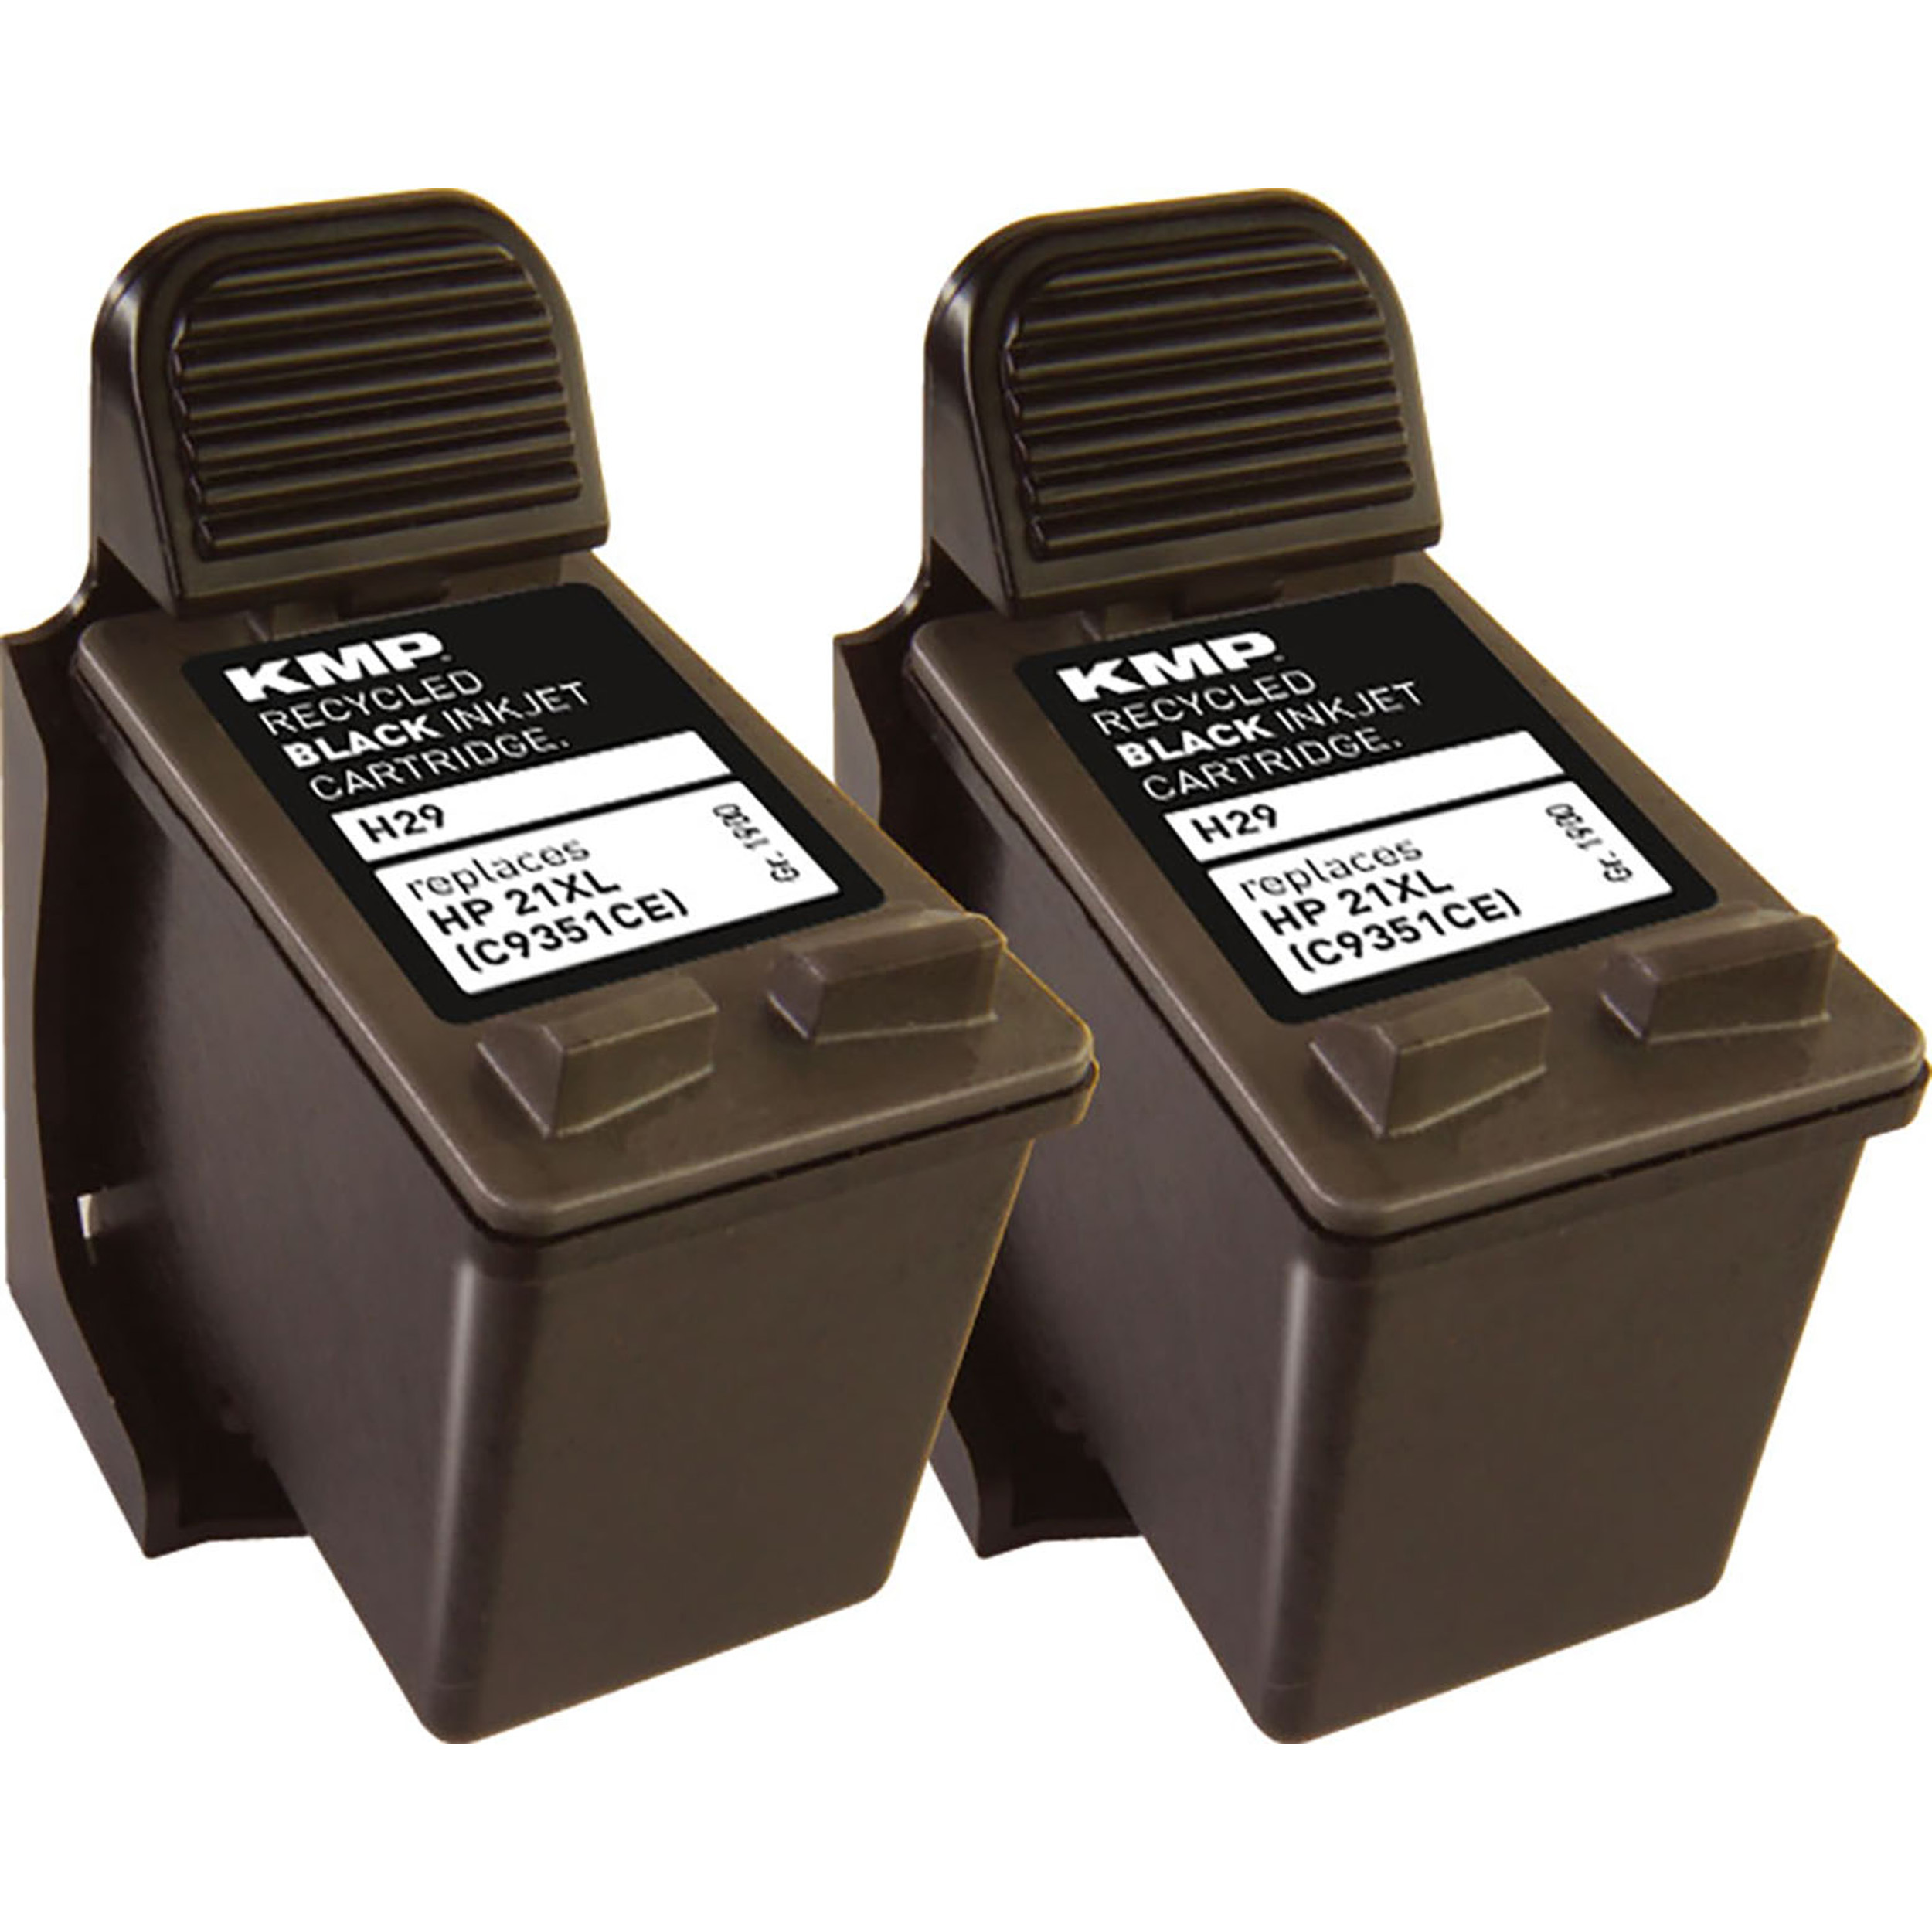 KMP Tintenpatrone für HP 21XL schwarz Ink Black Doublepack Cartridge (C9351CE) (C9351CE)